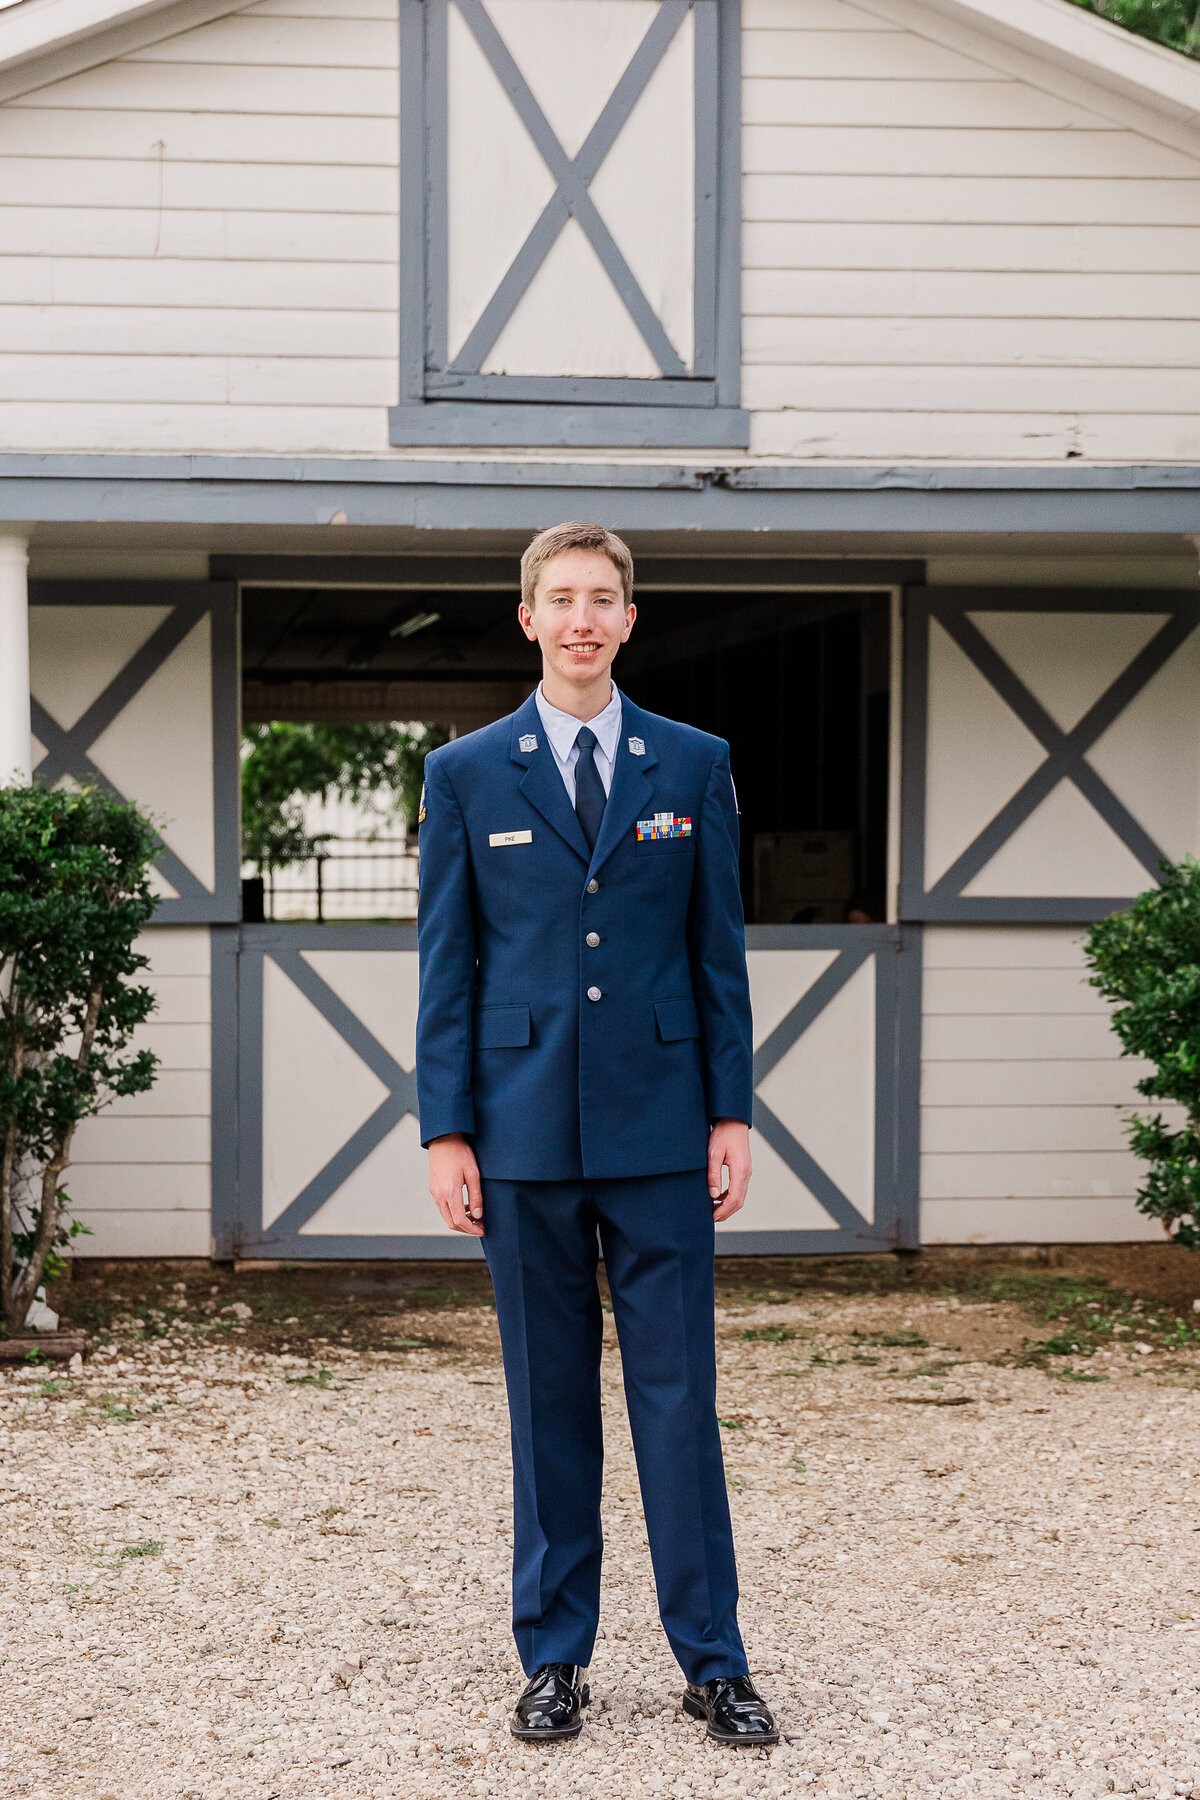 Man in uniform in front of barn